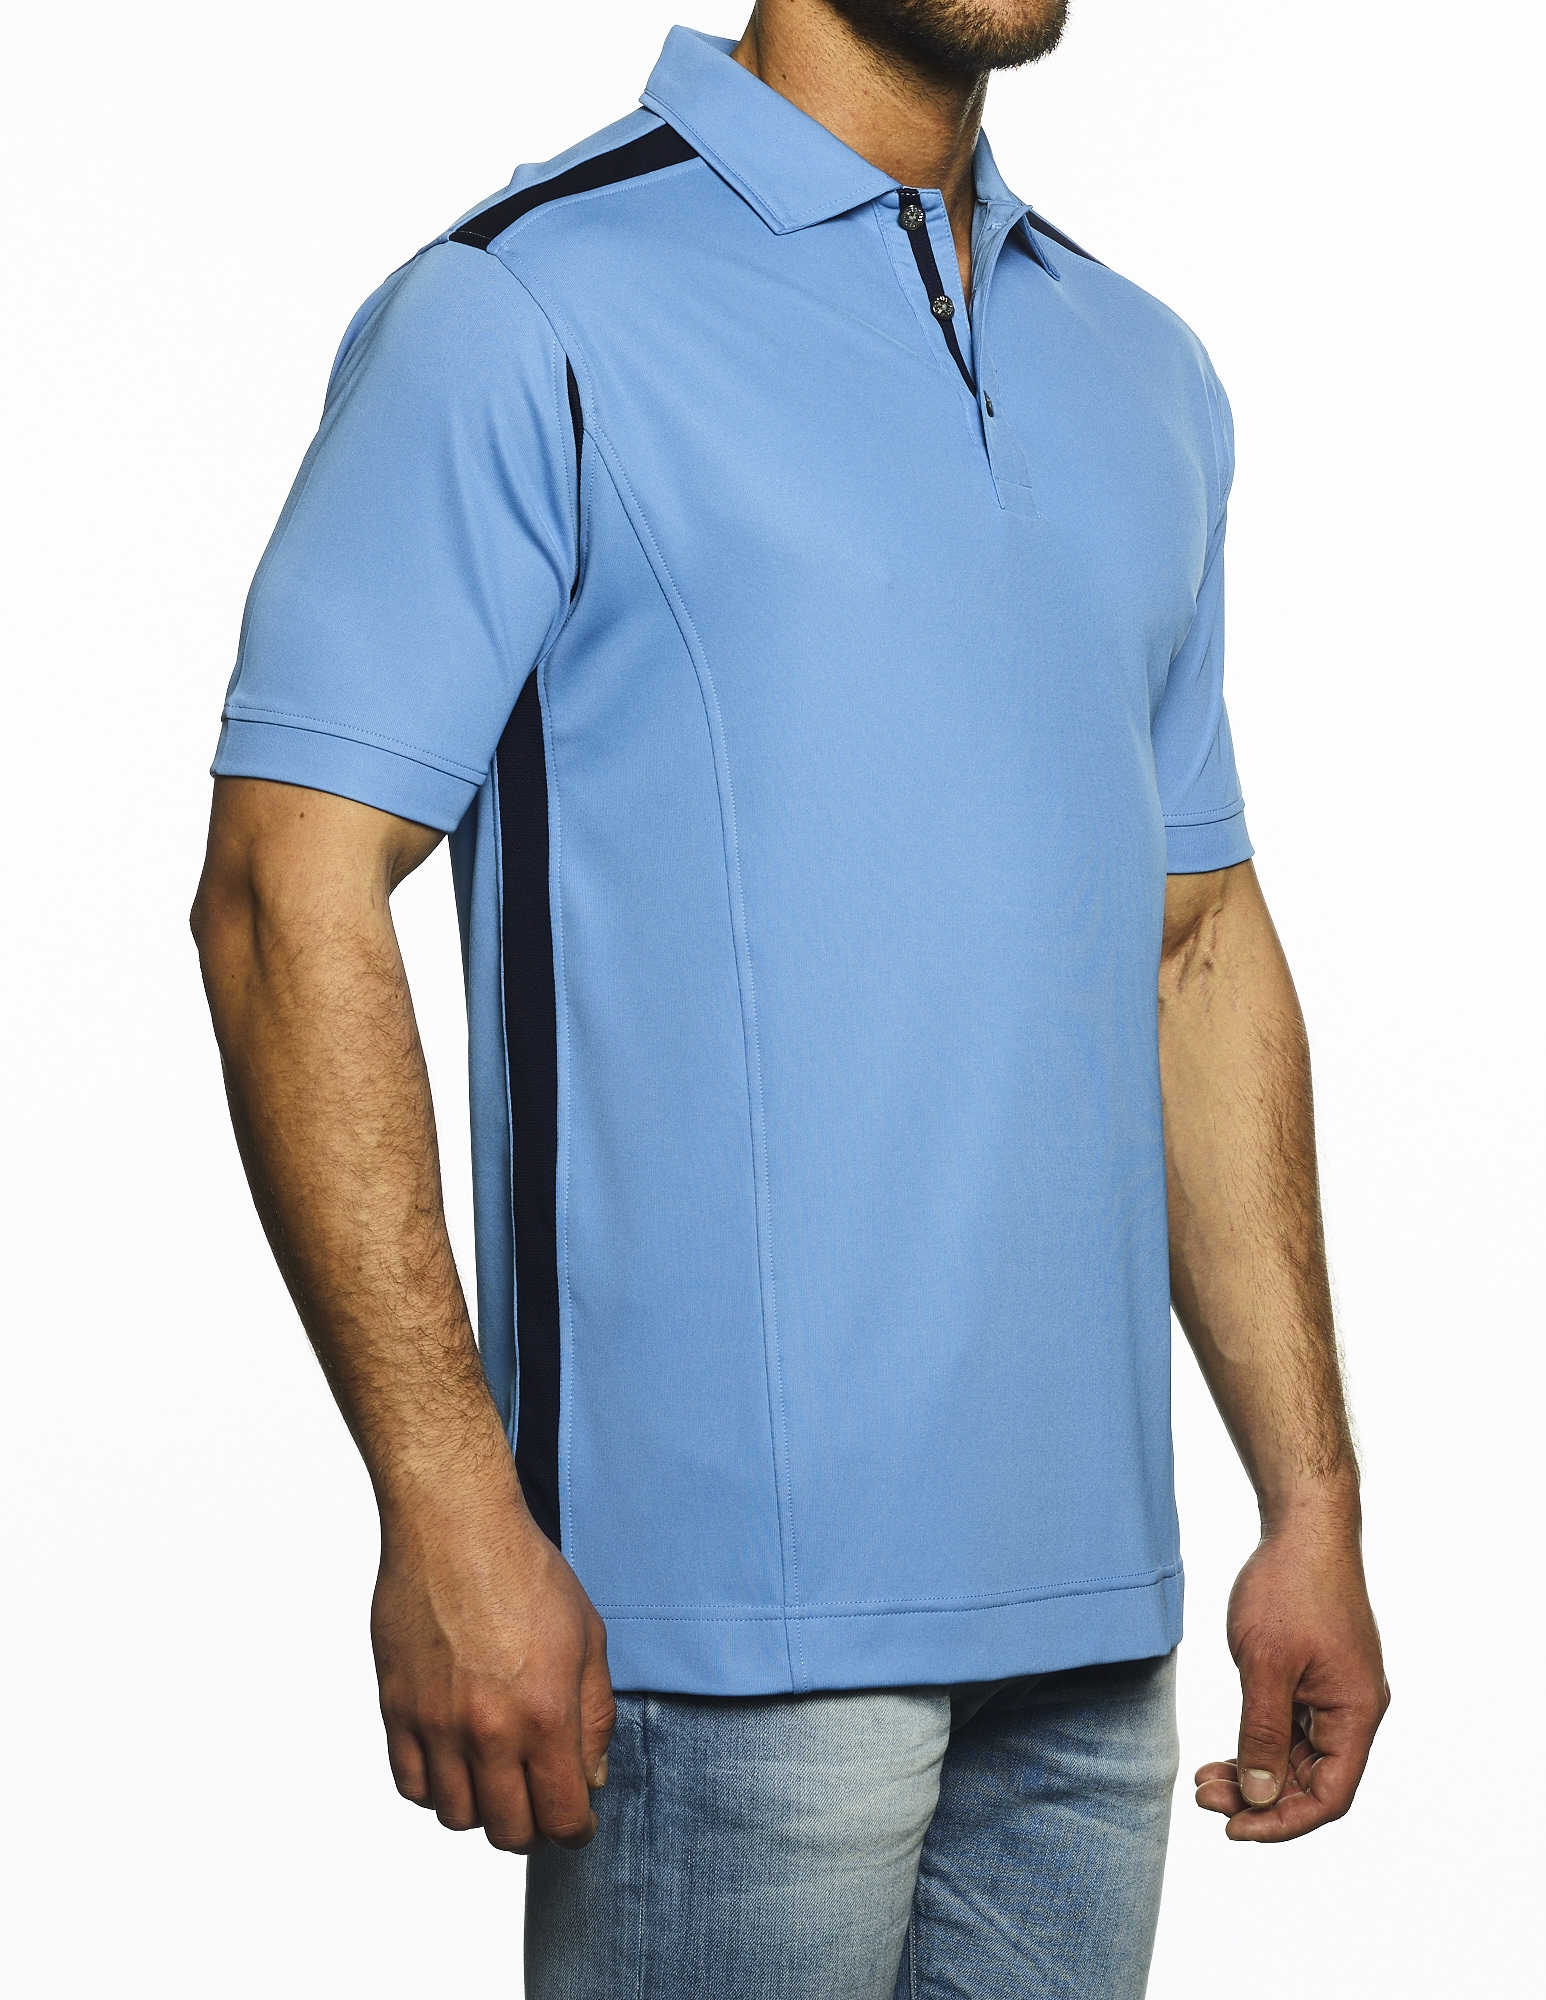 CEO polo shirts - Male